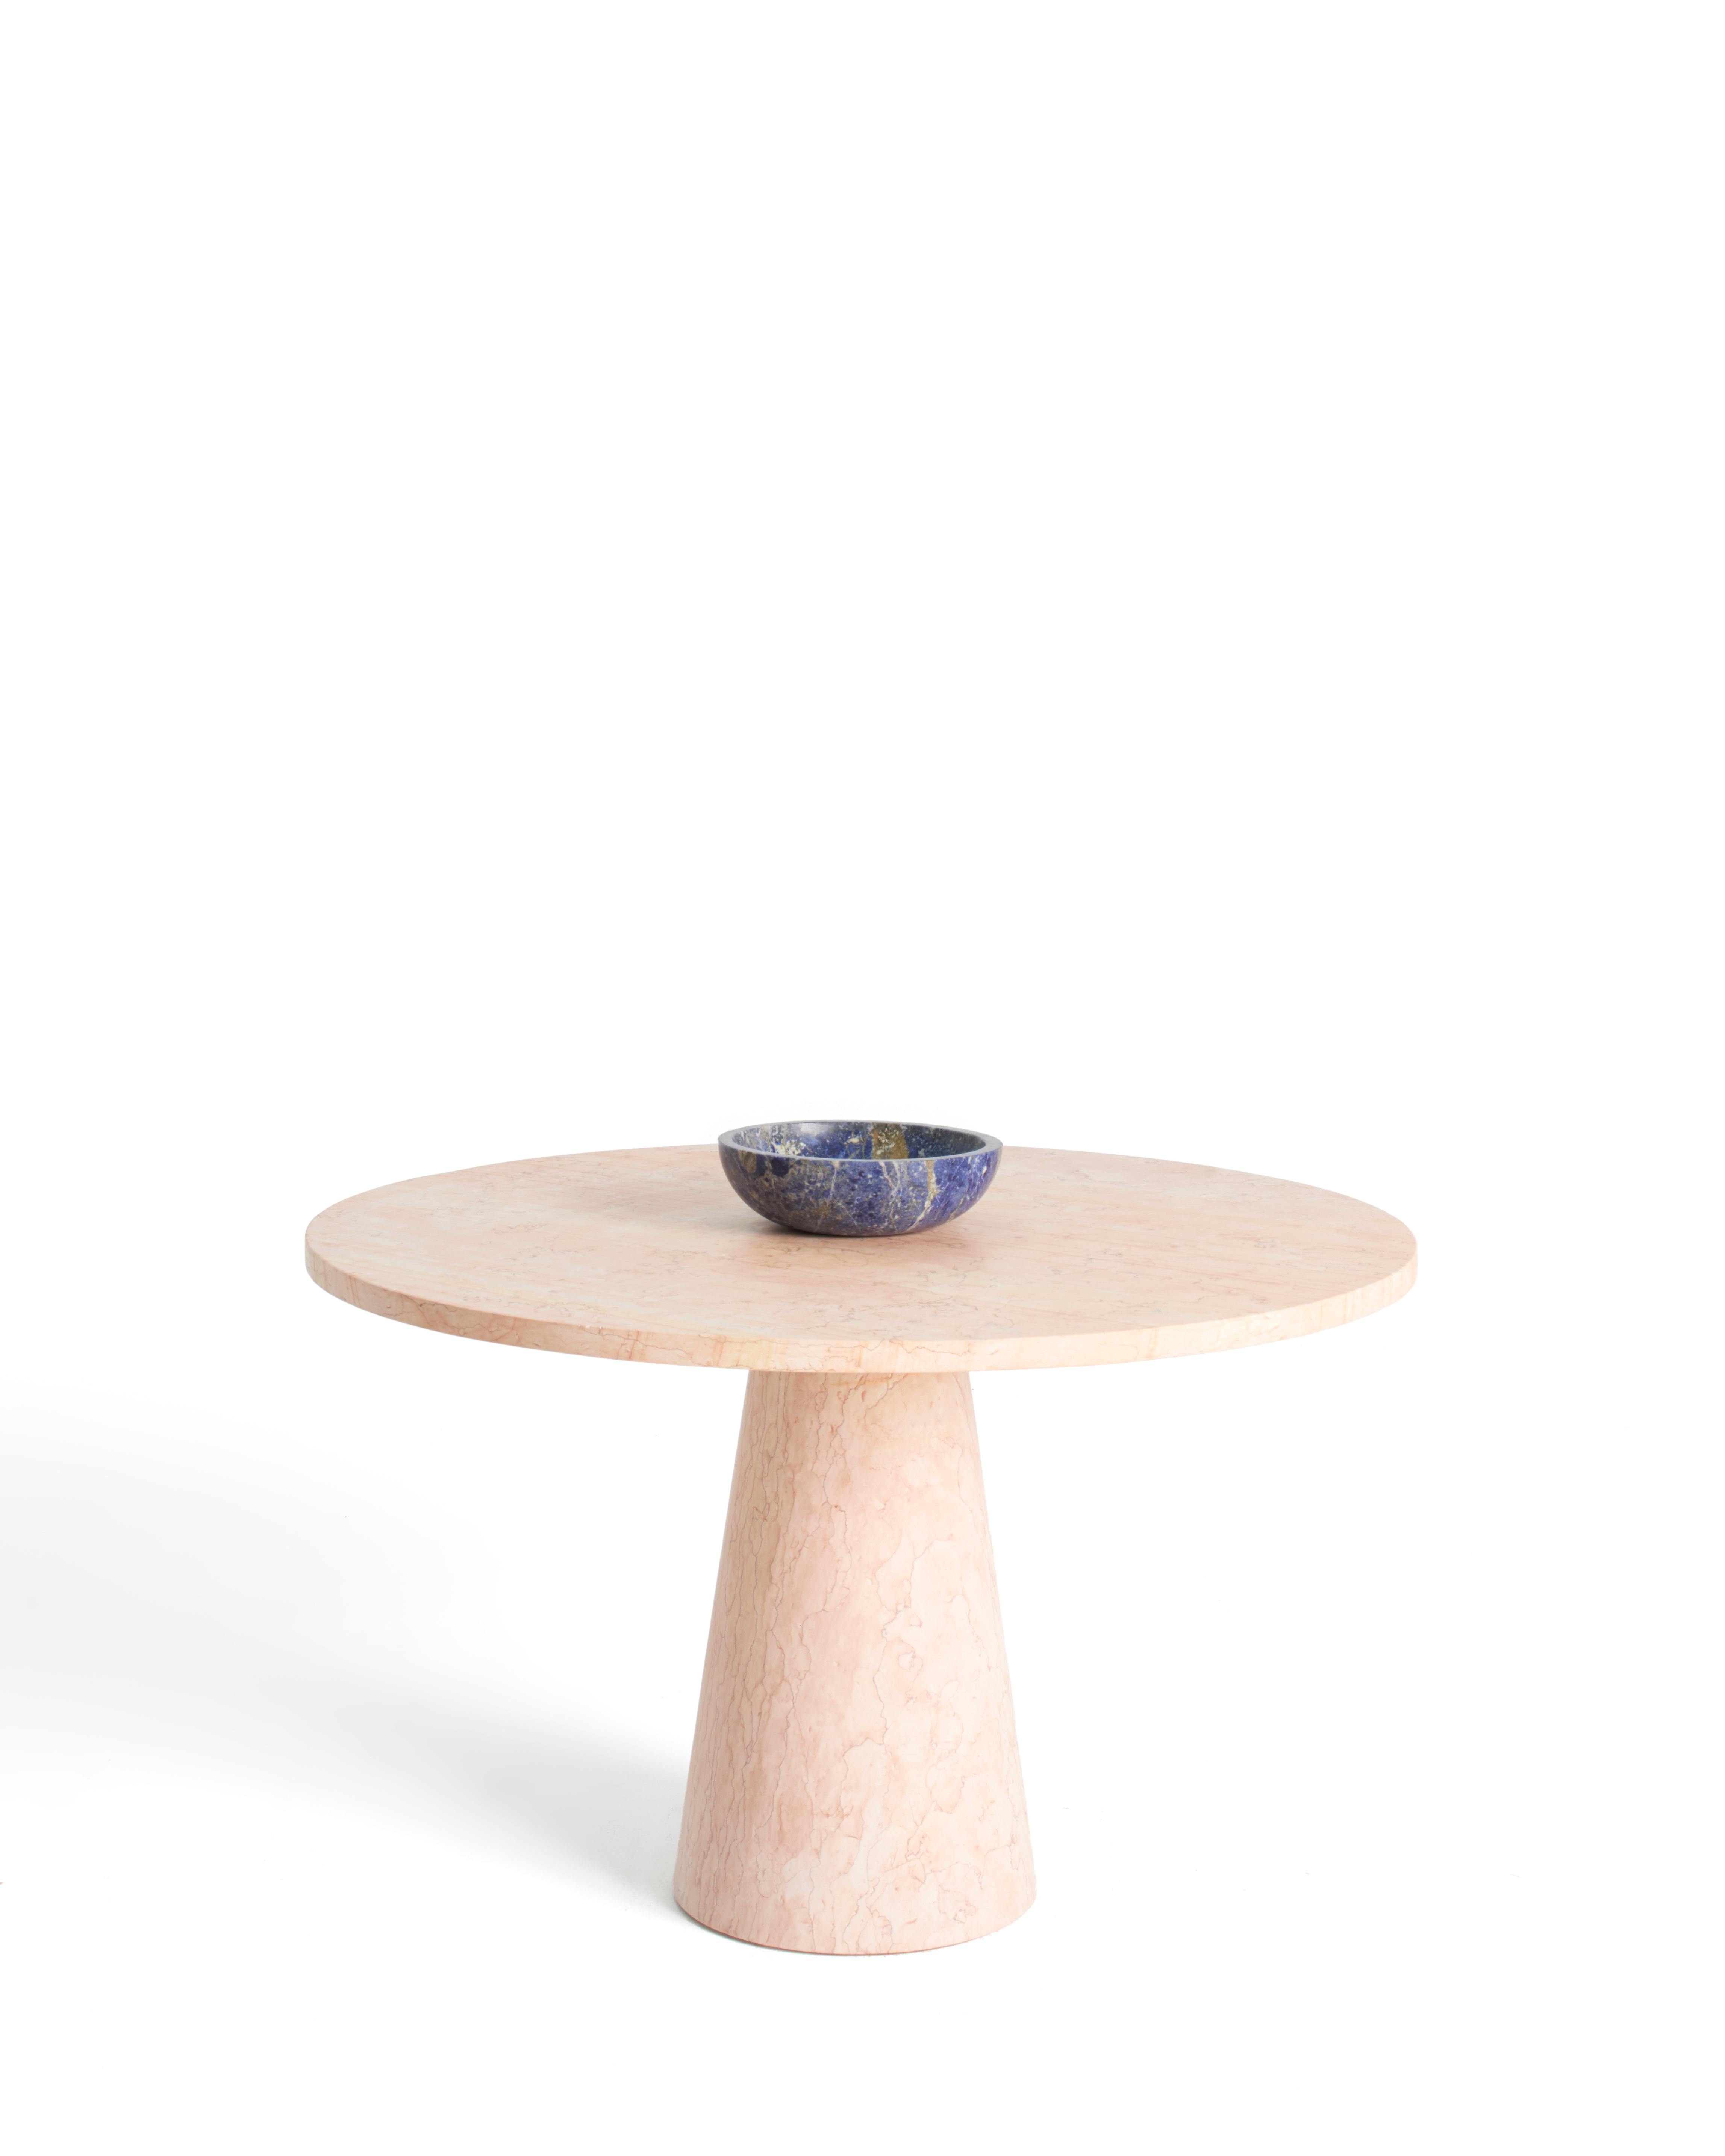 Modern Inside Out Dining Table by Karen Chekerdjian